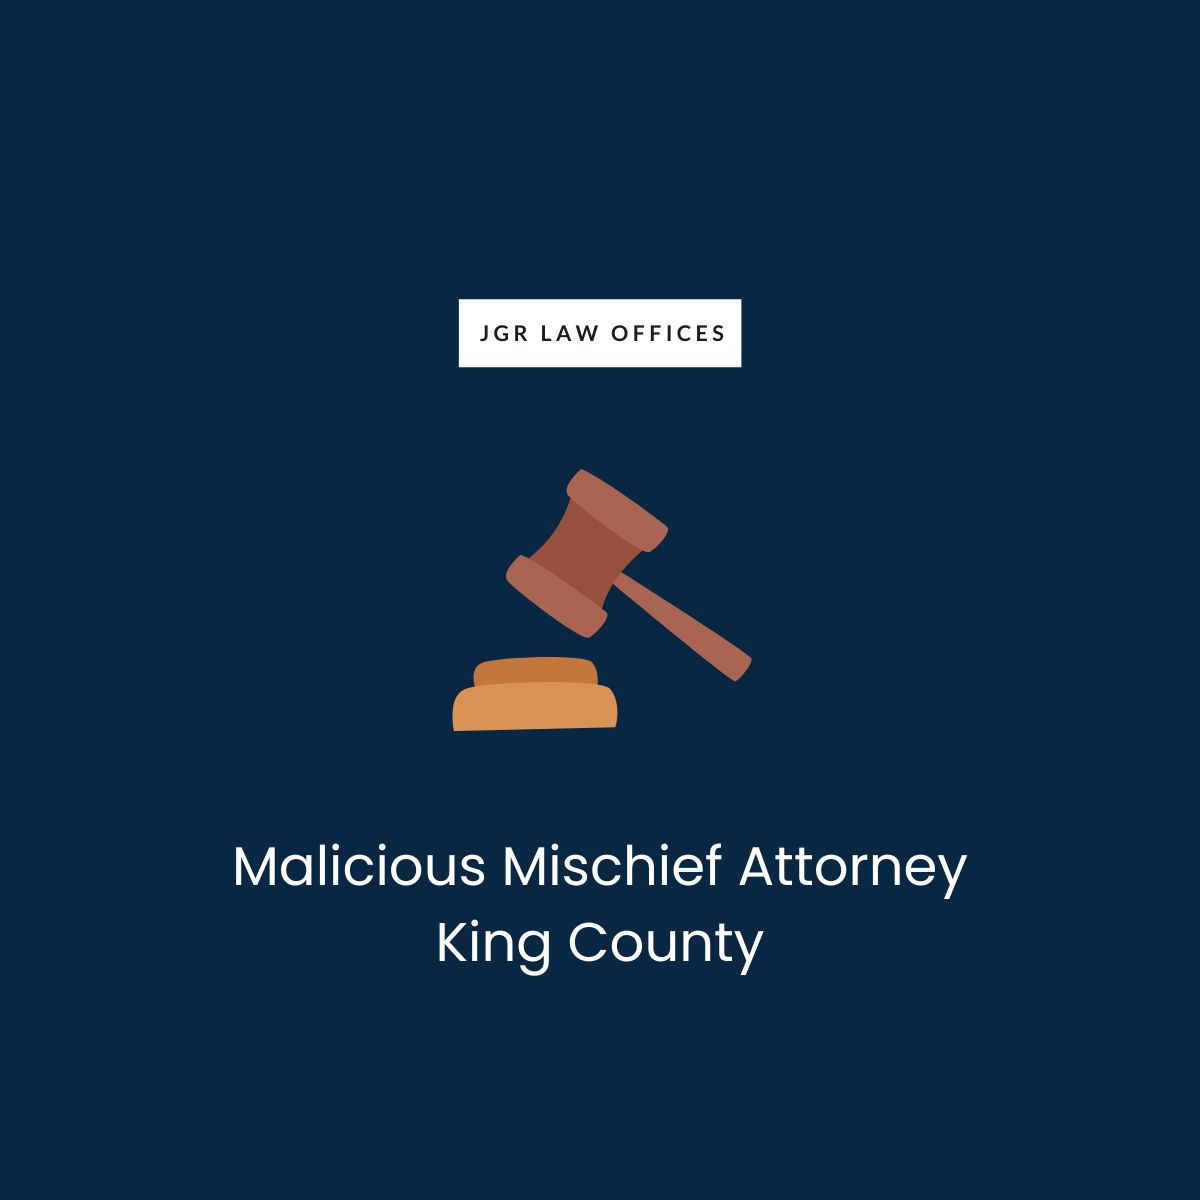 Malicious Mischief Attorney King County